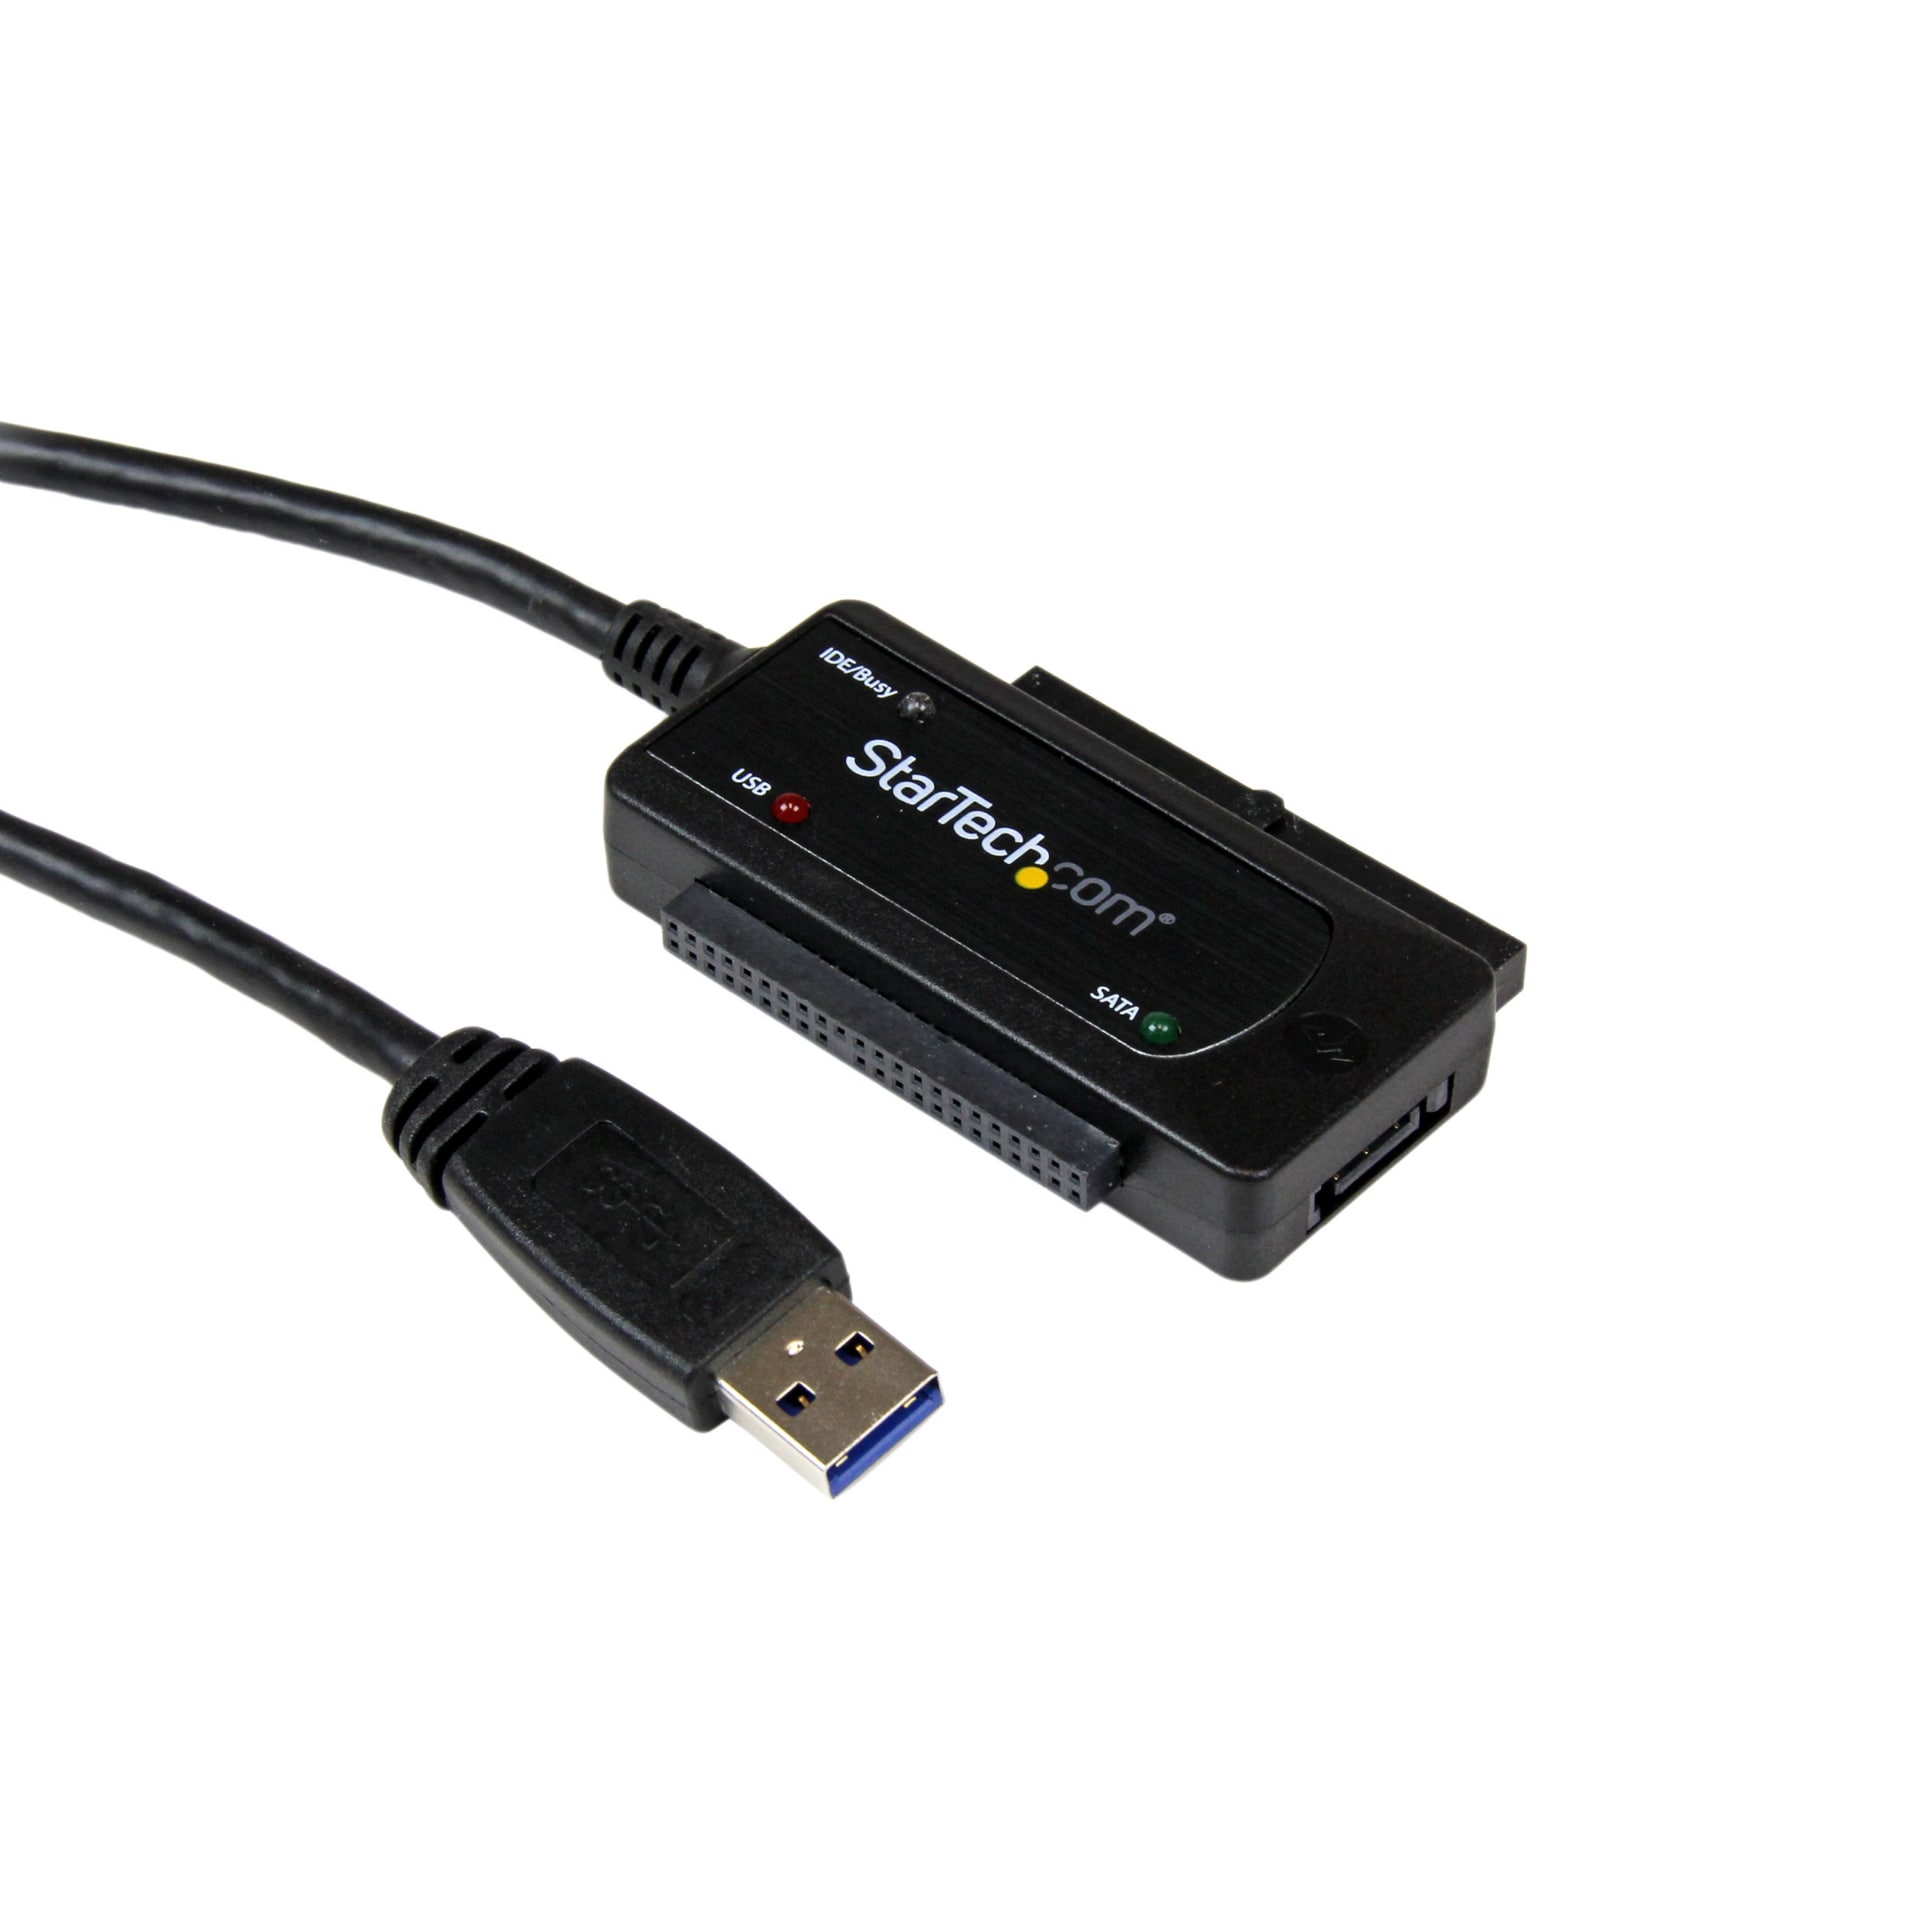 StarTech.com USB 3.0 to SATA or IDE Hard Drive Adapter Converter - USB3SSATAIDE - Mounts & Enclosures - CDW.com